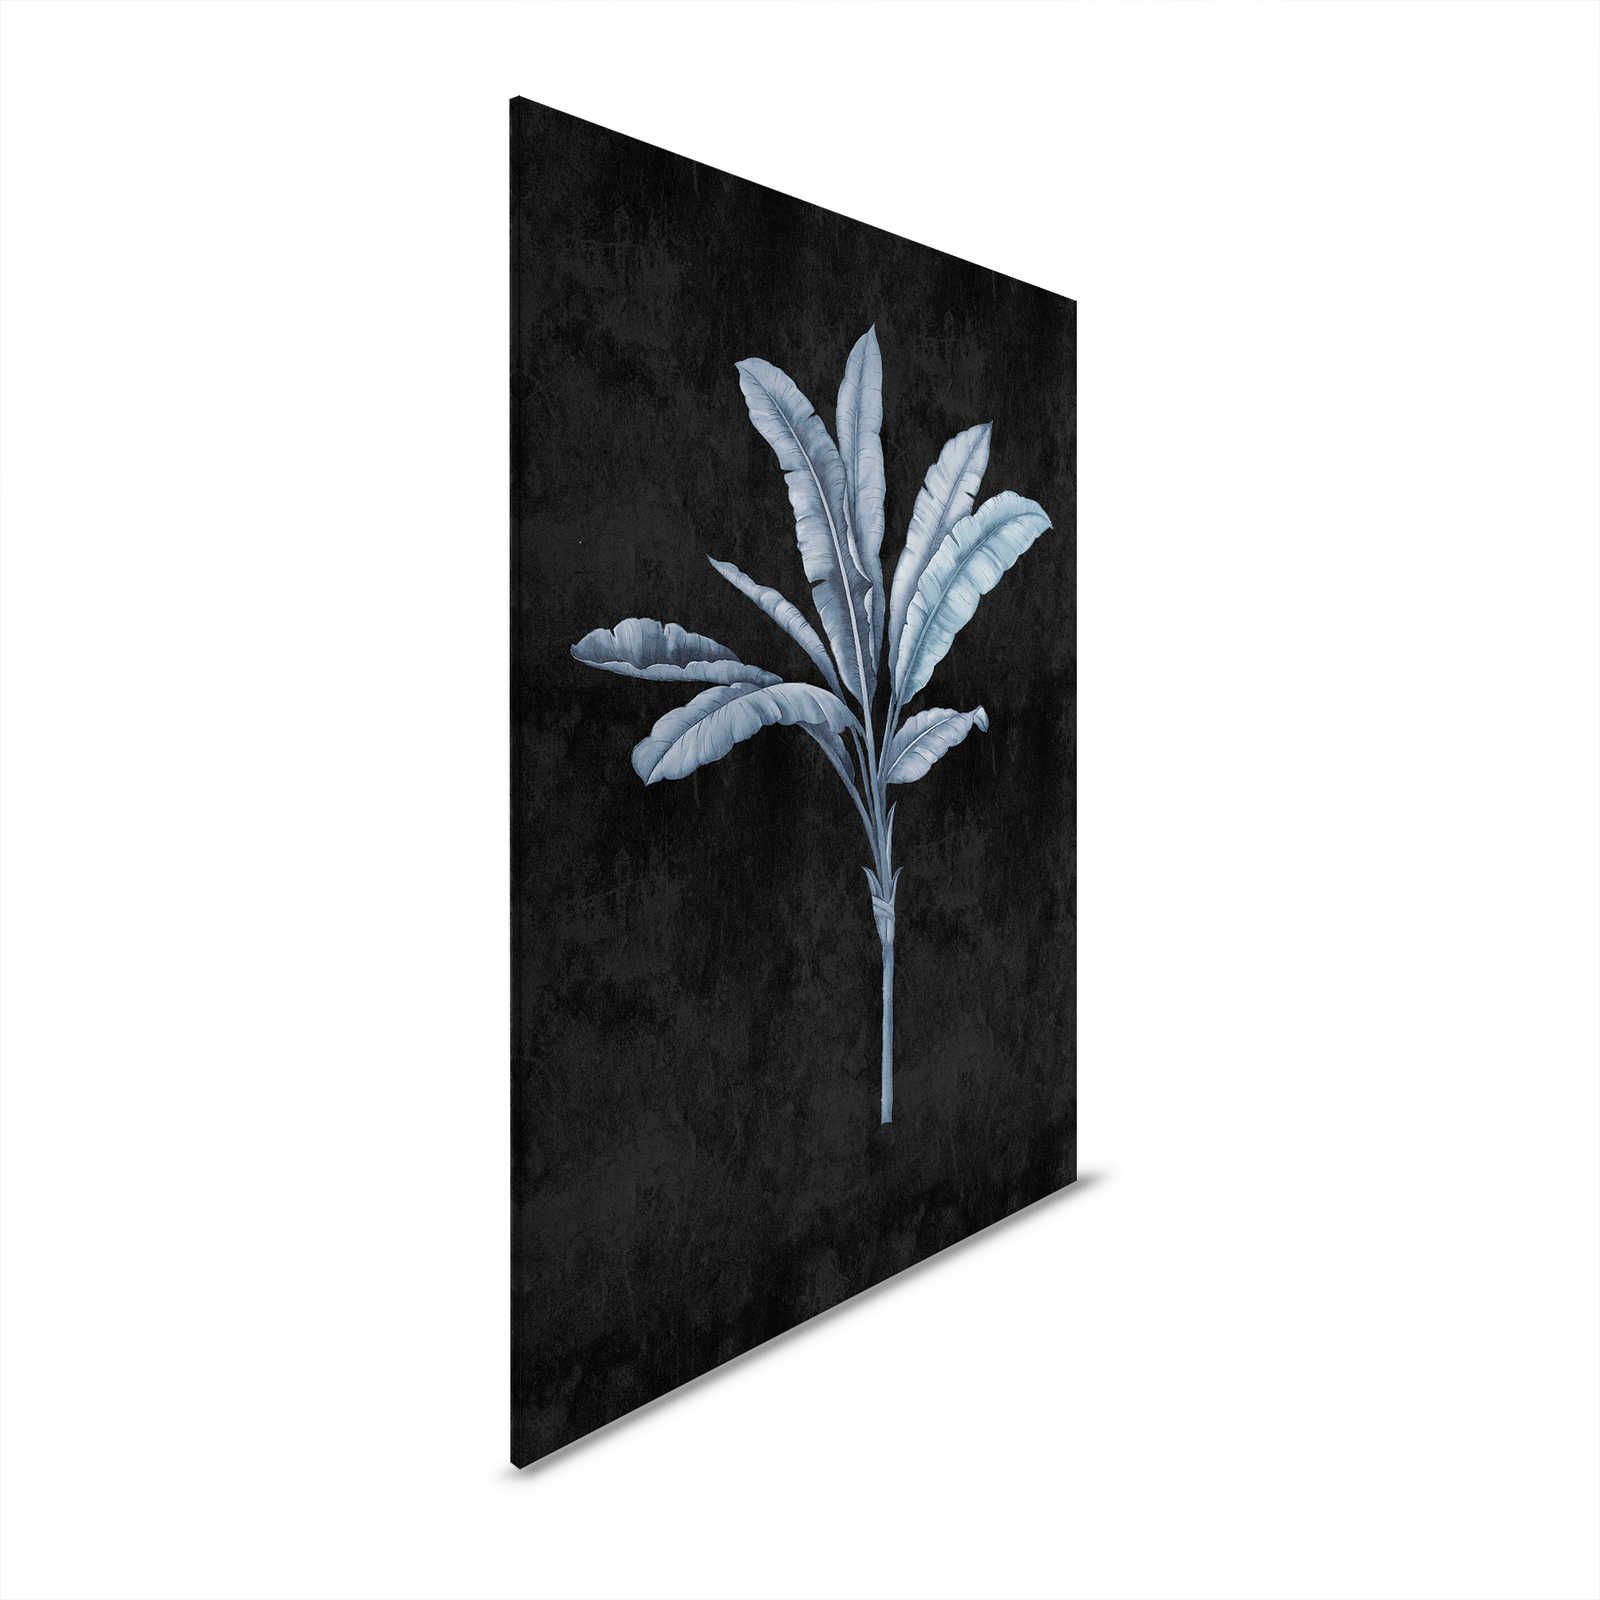 Fiji 2 - Cuadro en lienzo Negro con motivo de palmeras Gris Azul - 0,60 m x 0,90 m
